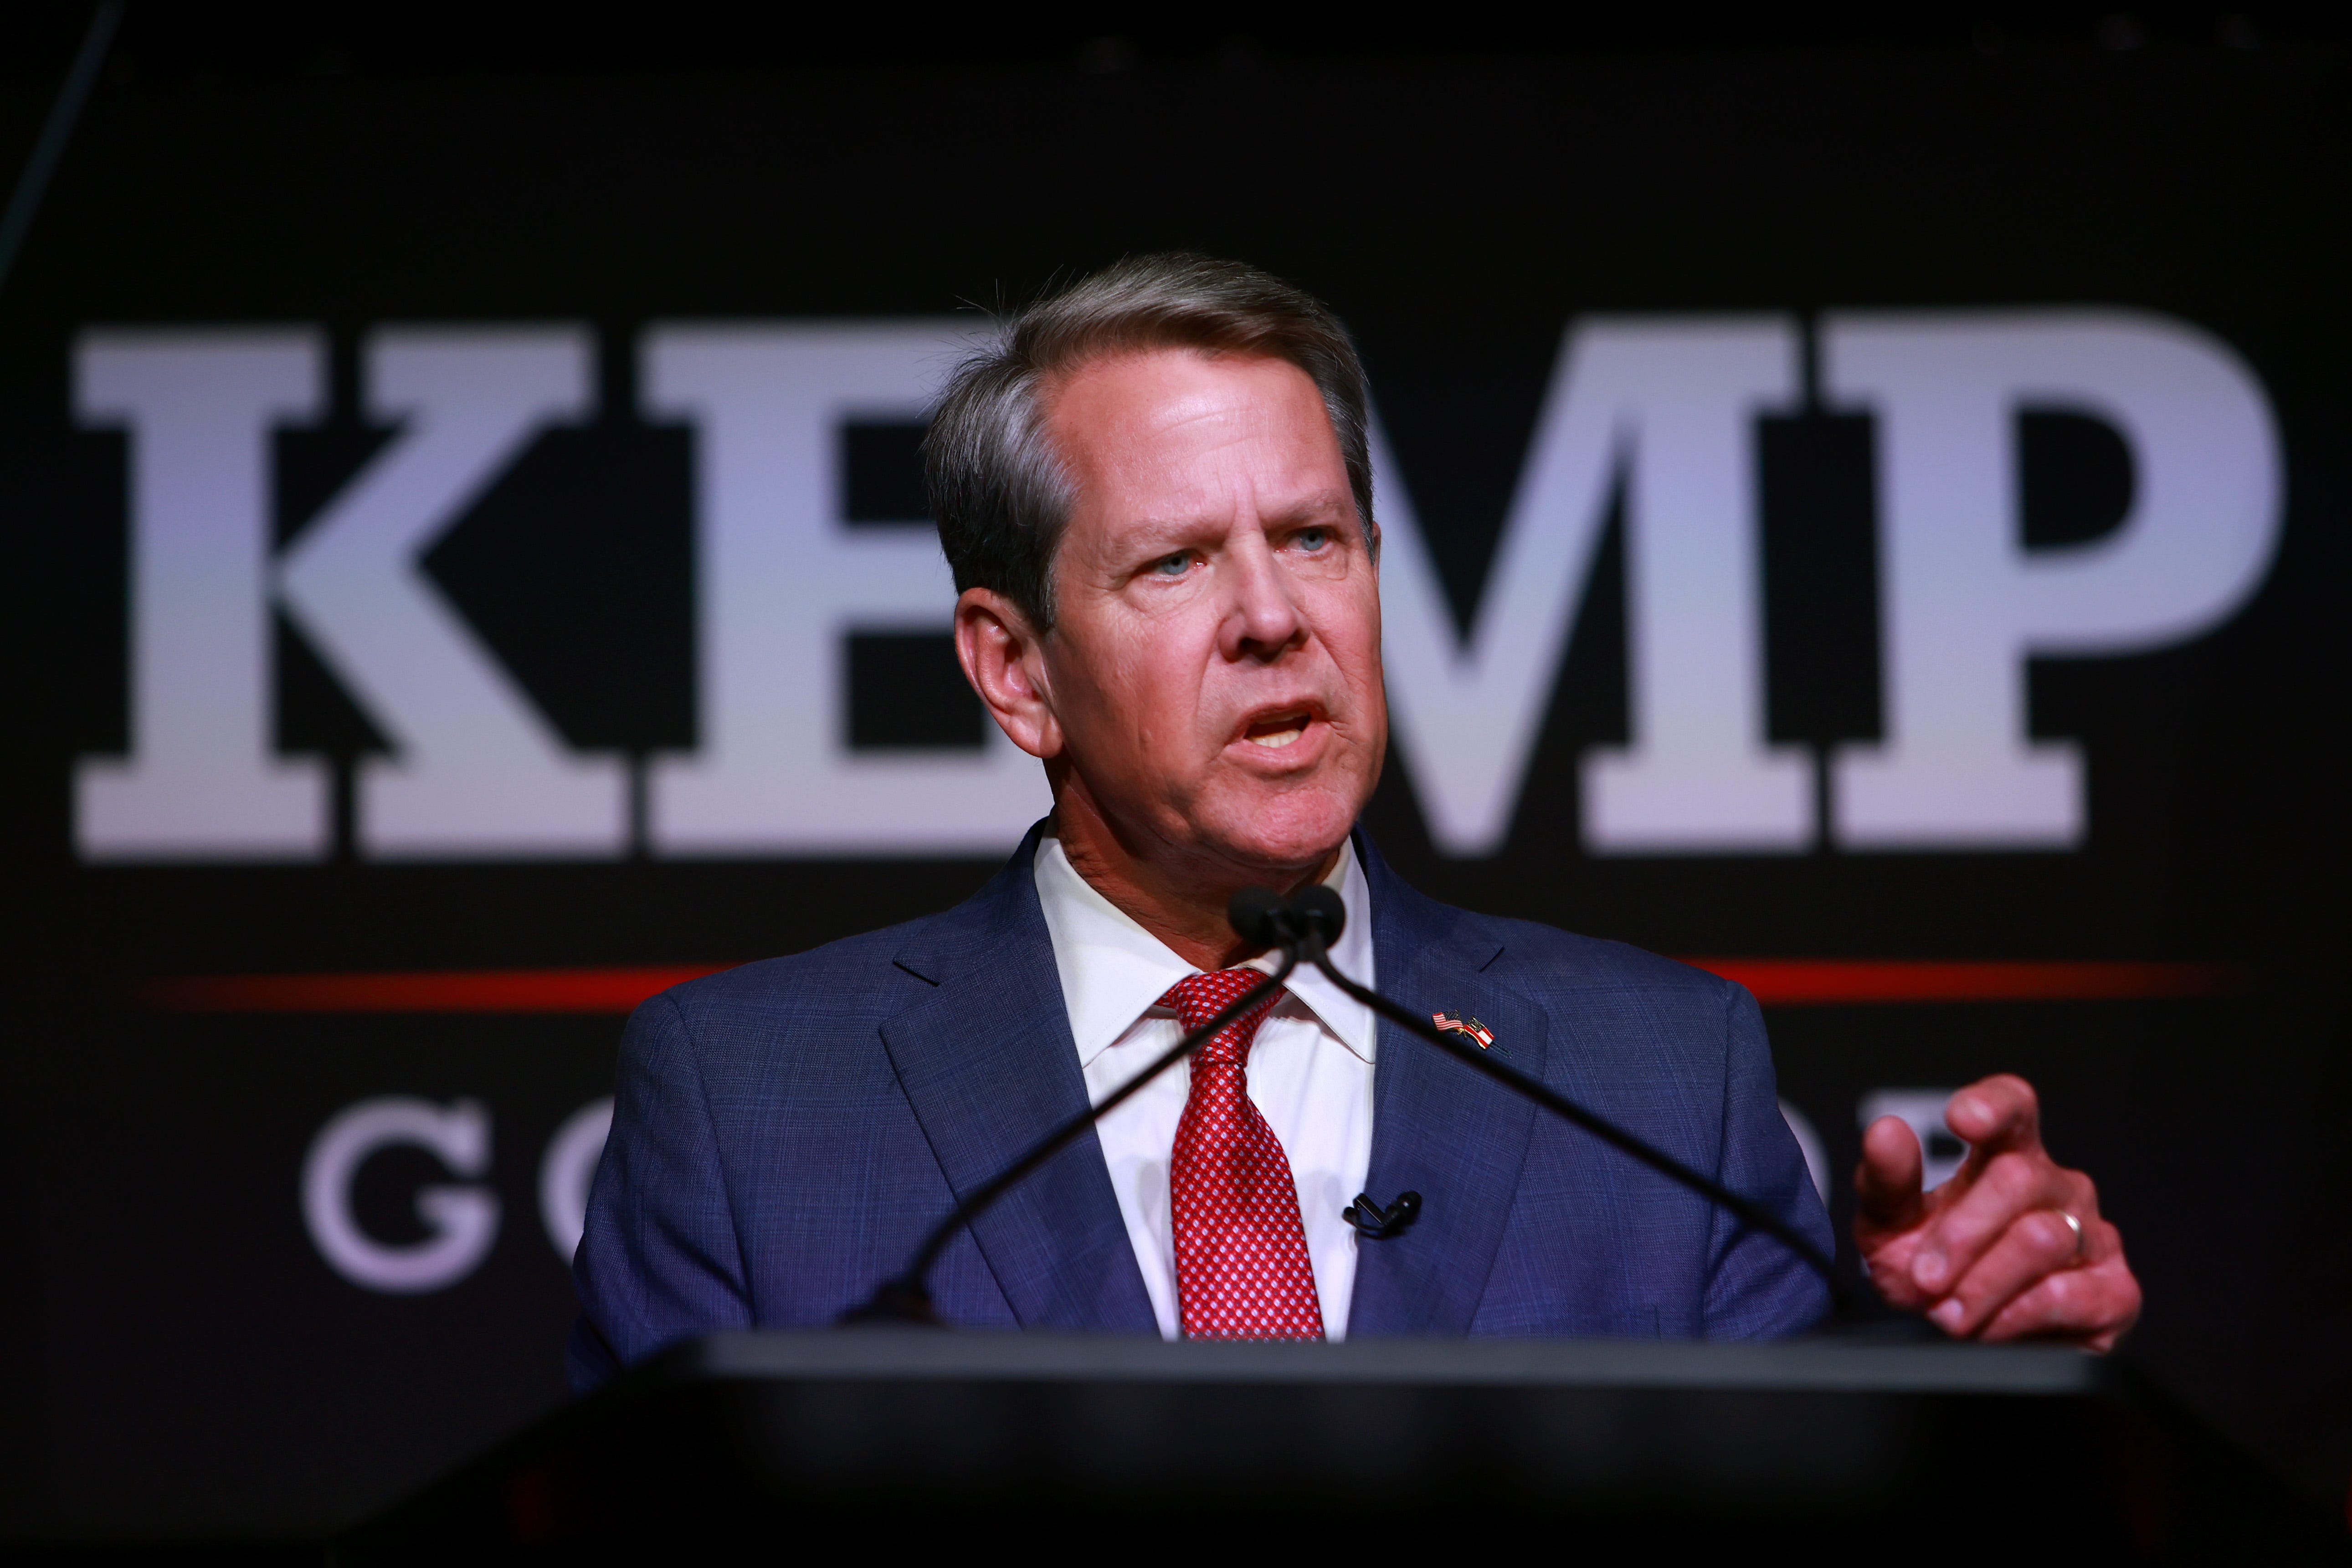 Bad night for Trump: Kemp wins GA Gov primary, Brooks makes it to Ala Senate runoff: live updates